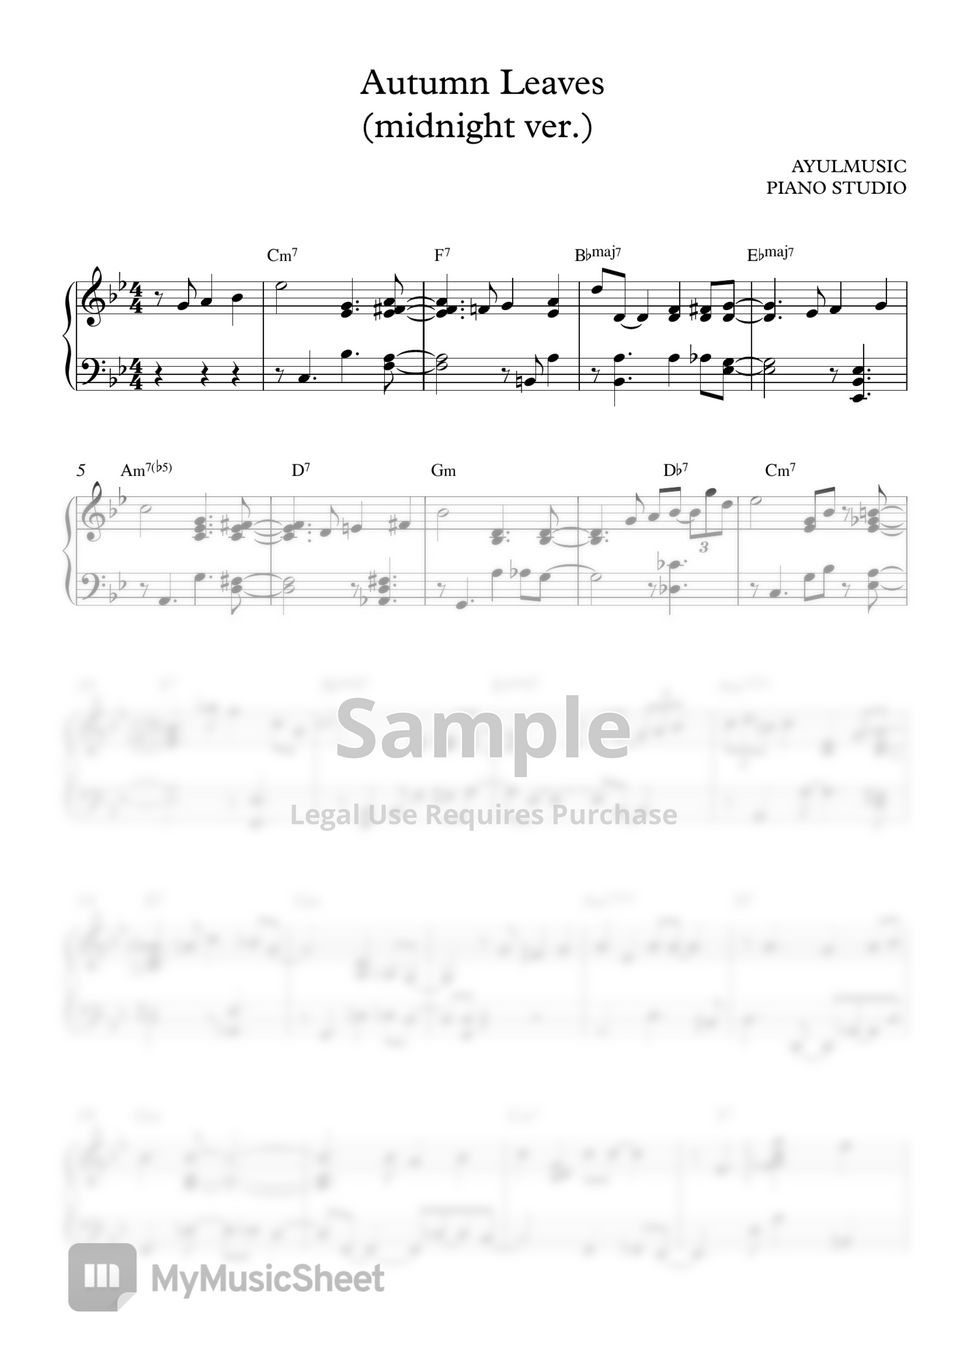 Joseph Kosma - Autumn Leaves (Midnight ver. (medium level)) by AYULMUSIC PIANO STUDIO